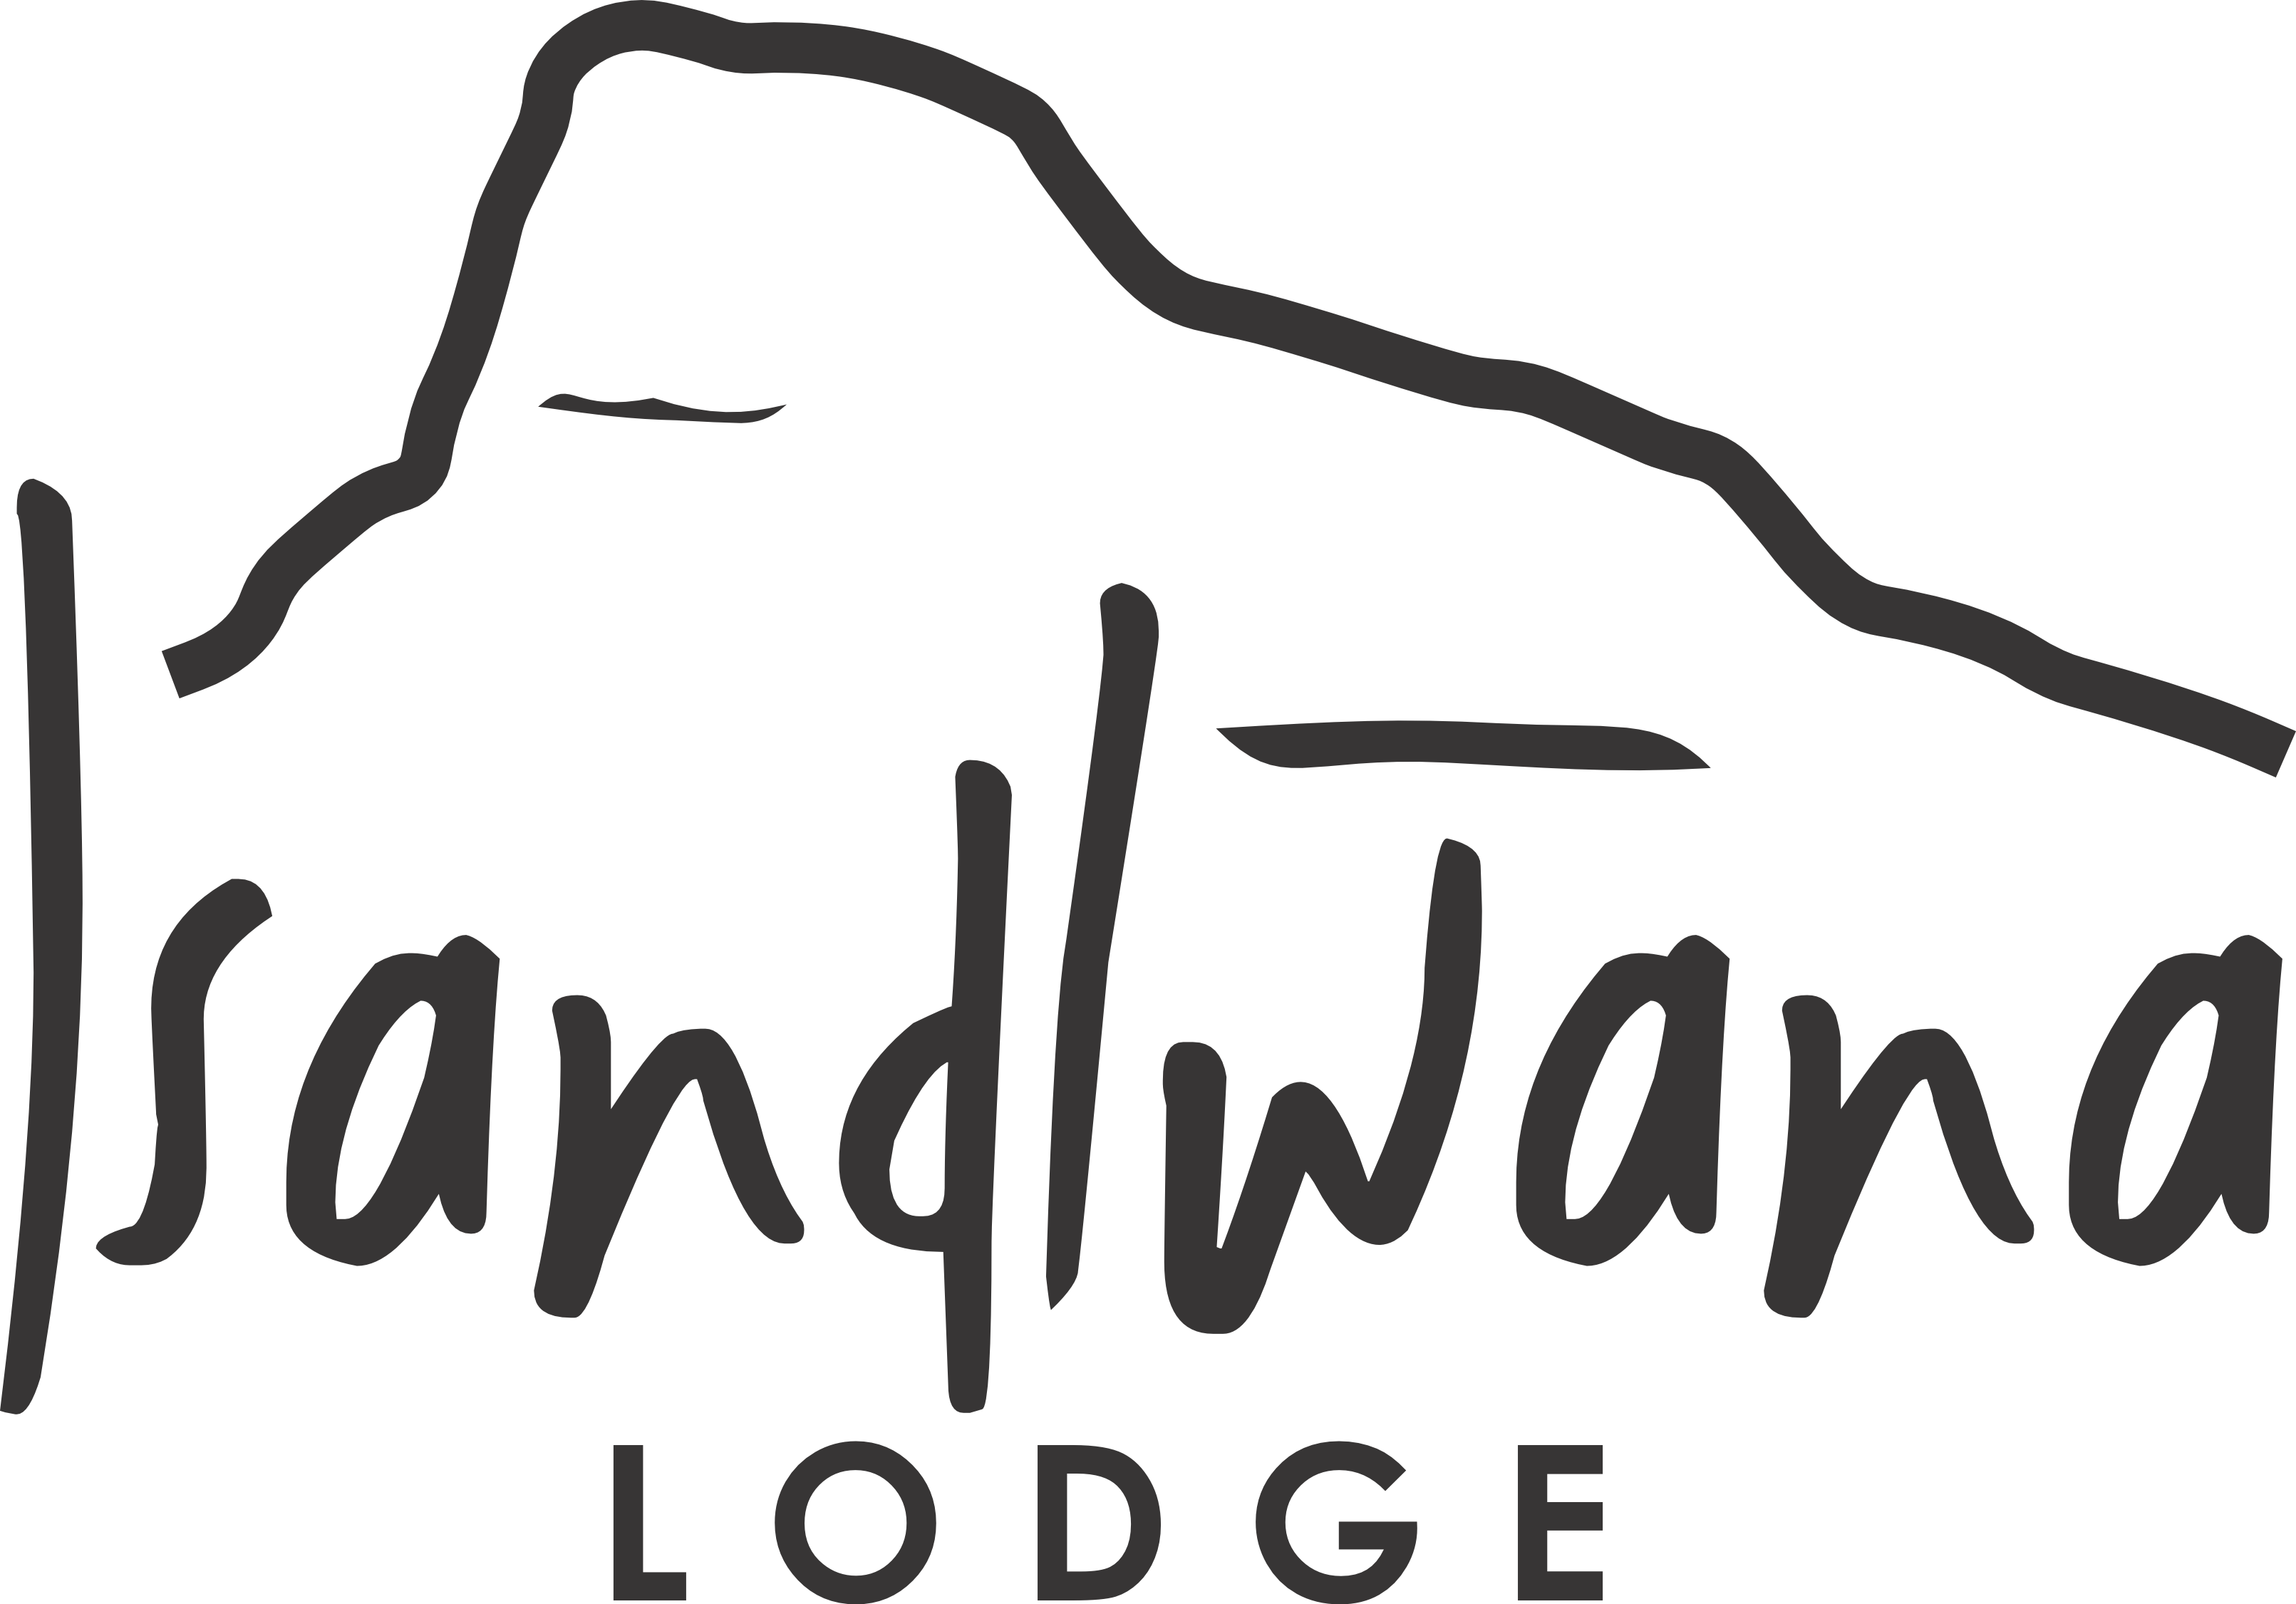 Isandlwana Lodge